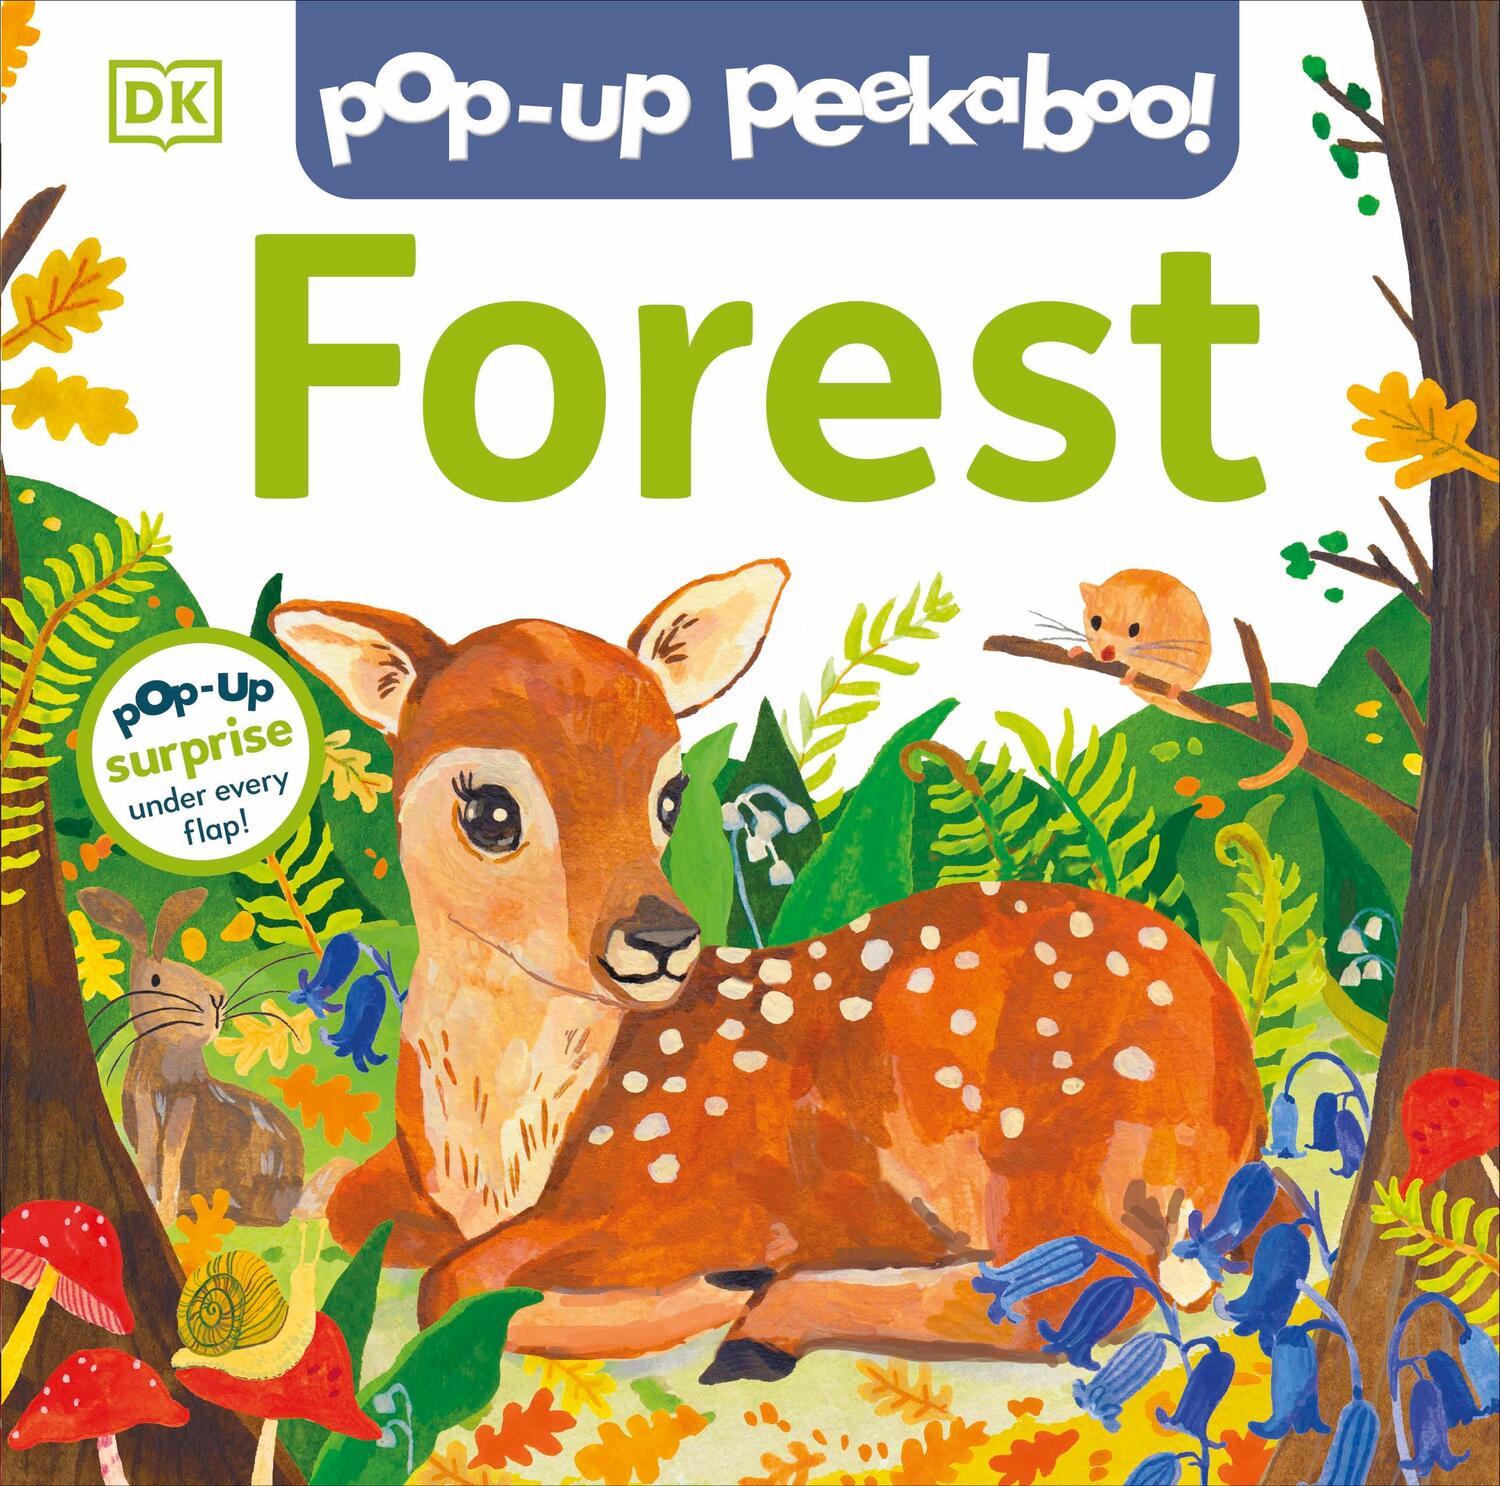 Cover: 9780241625521 | Pop-Up Peekaboo! Forest | Pop-Up Surprise Under Every Flap! | DK